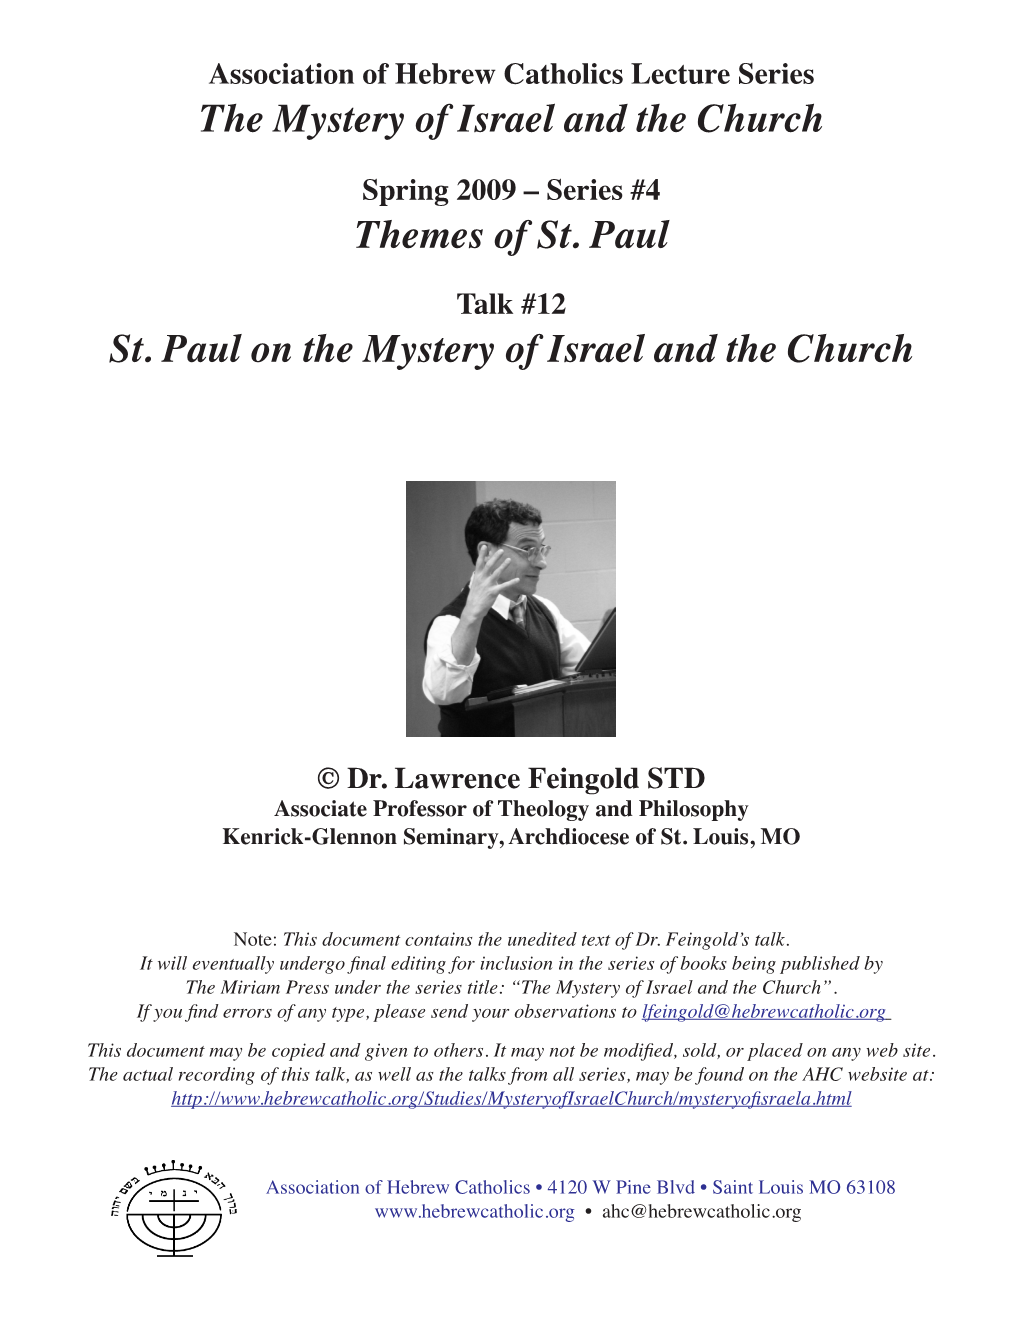 Themes of St. Paul St. Paul on The